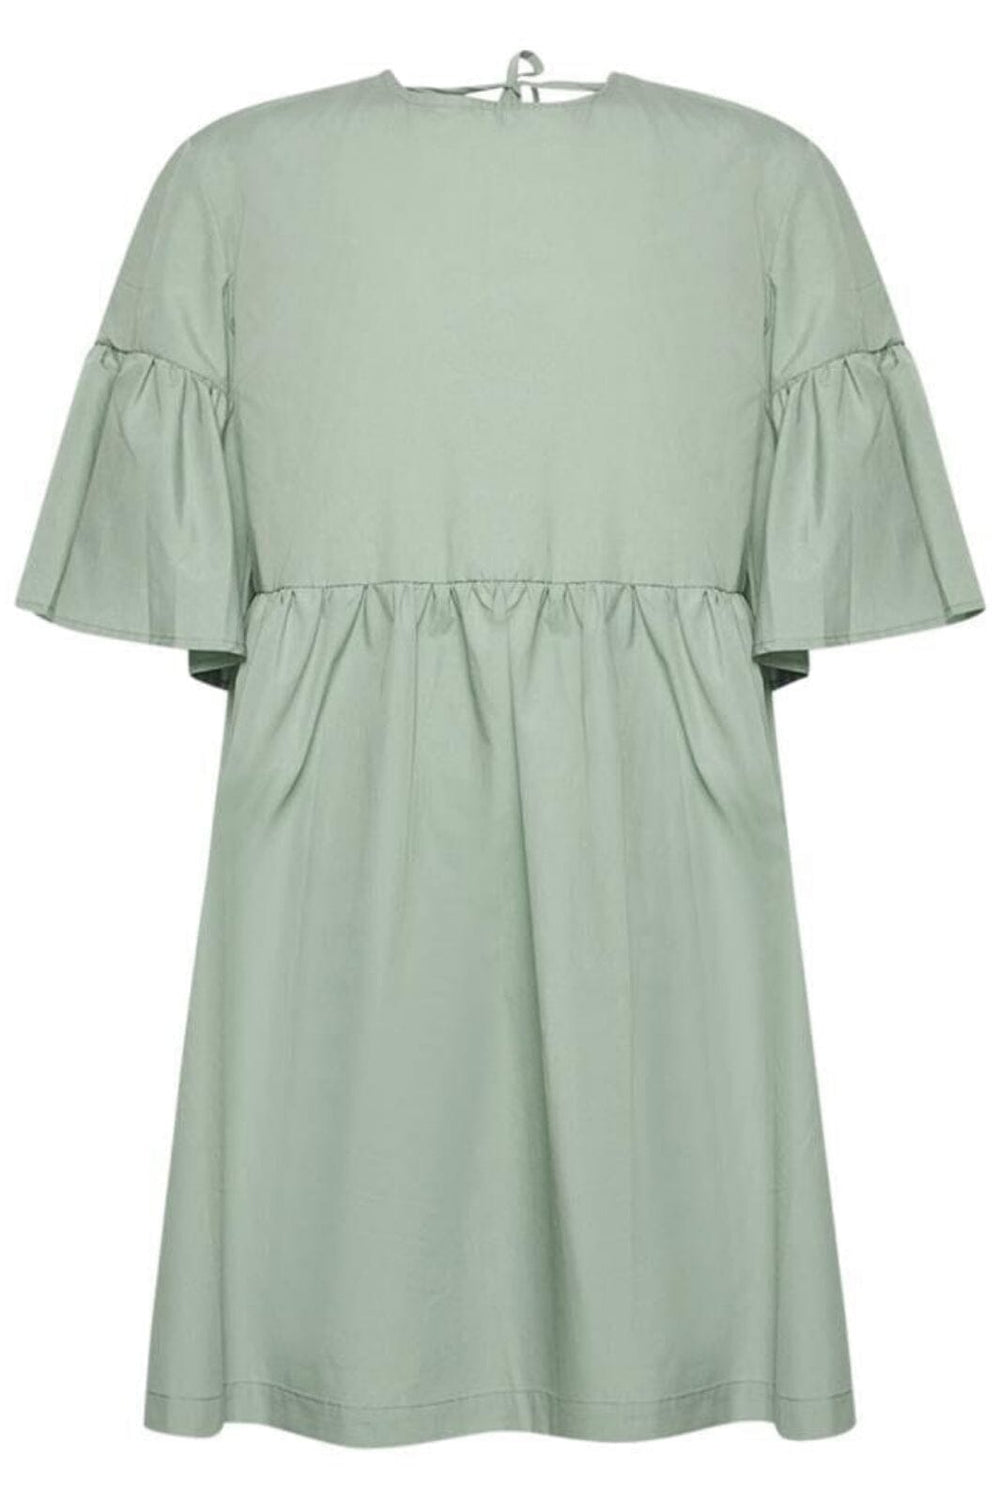 Noella - Adaleide Dress - 1147 Green Pastel Kjoler 